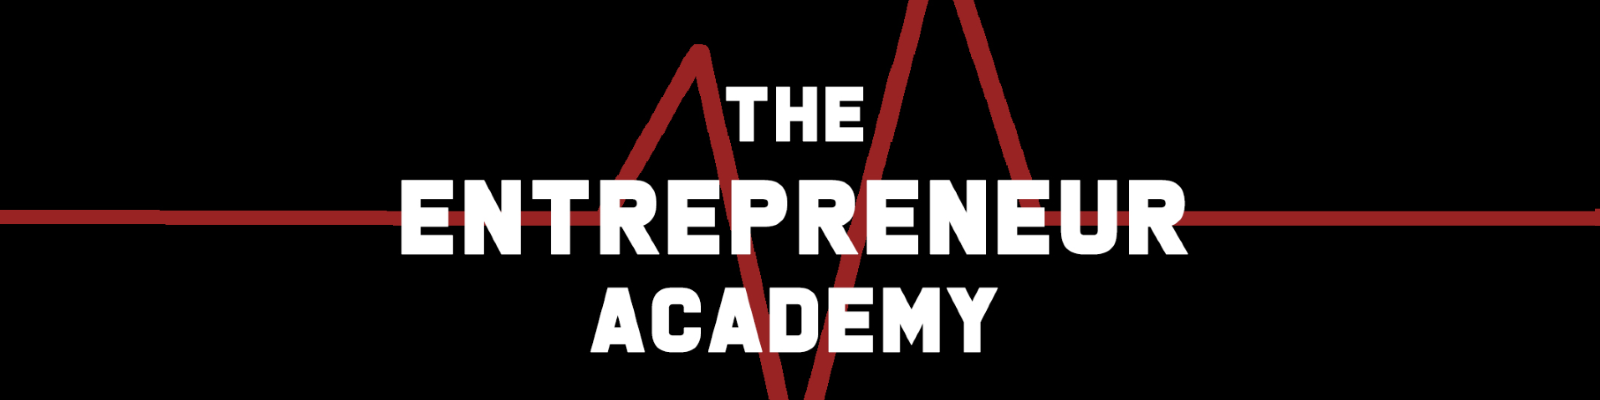 The Entrepreneur Academy